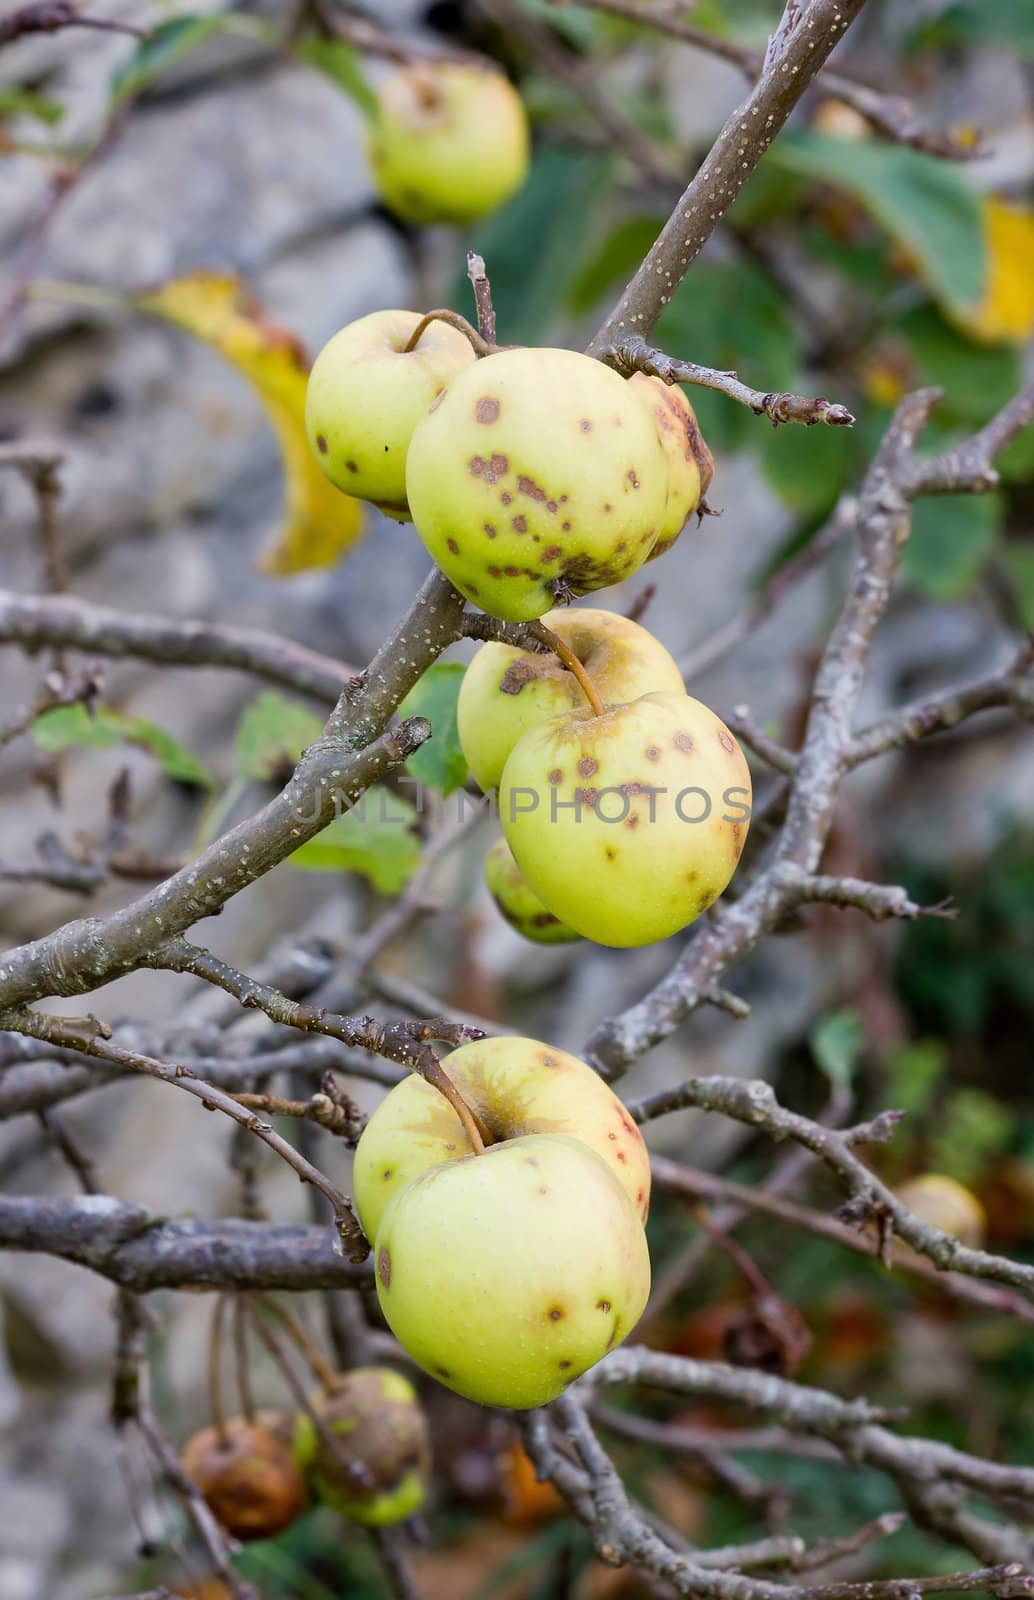 yellow hailed apple, summer end, beginning of autumn by neko92vl